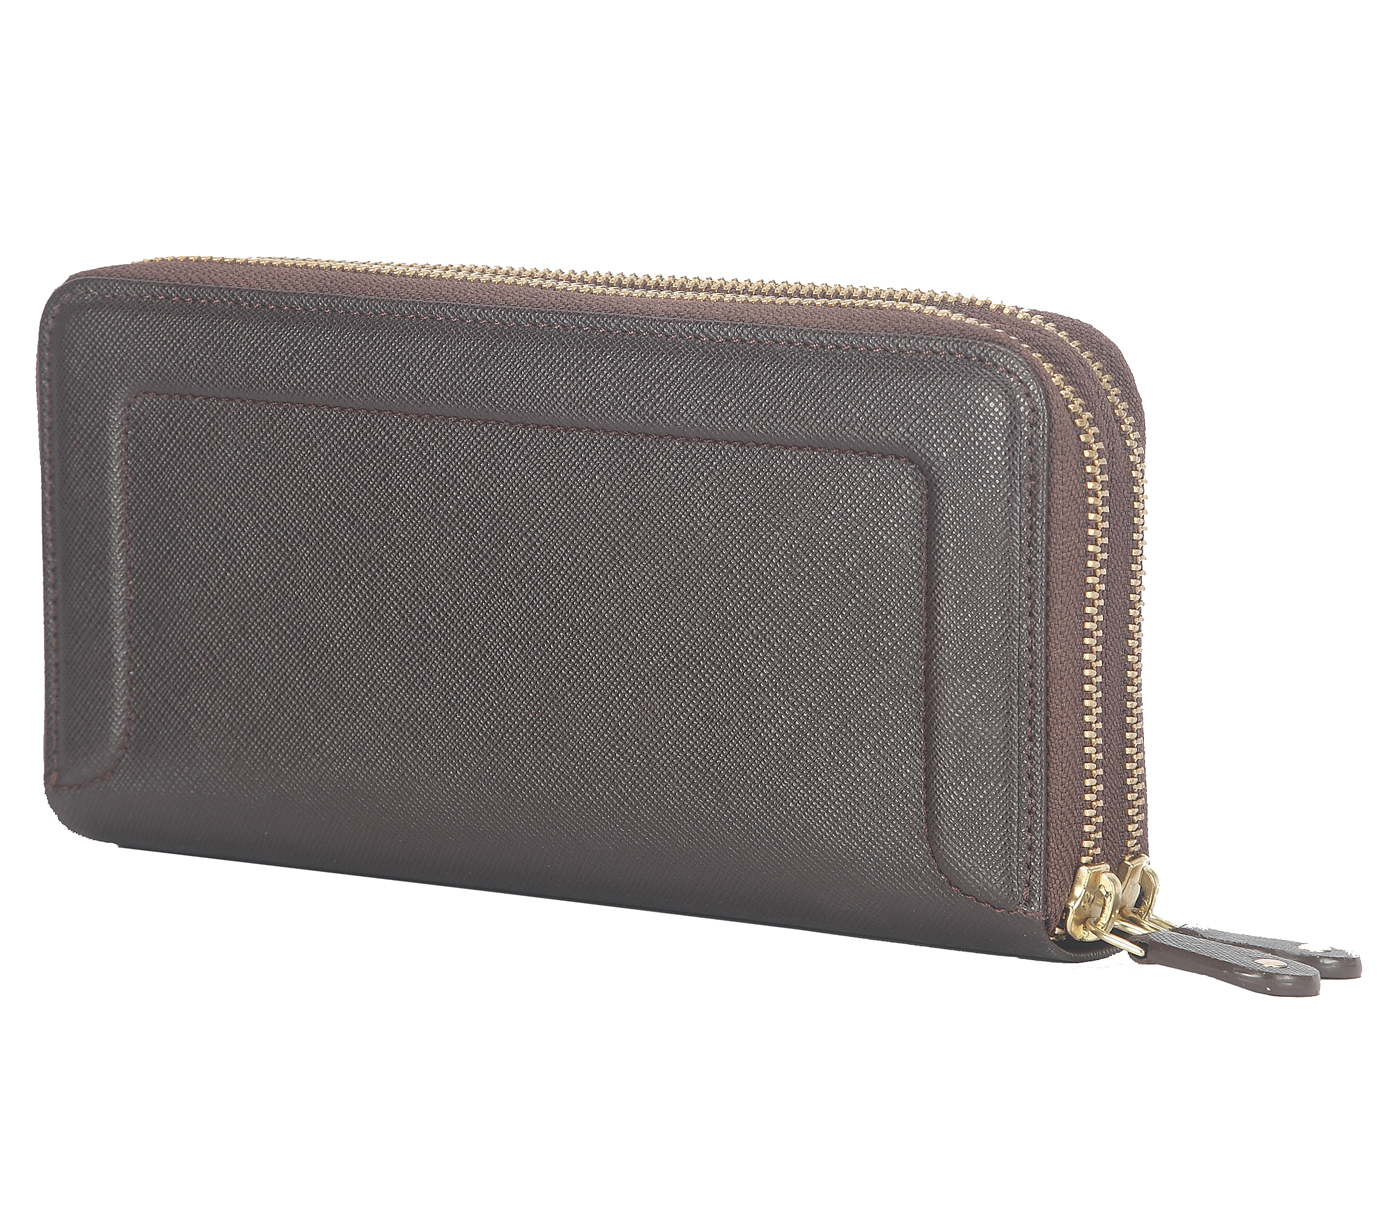 Wallet-Madeline-Women's day cum travel wallet in Genuine Leather - Brown.